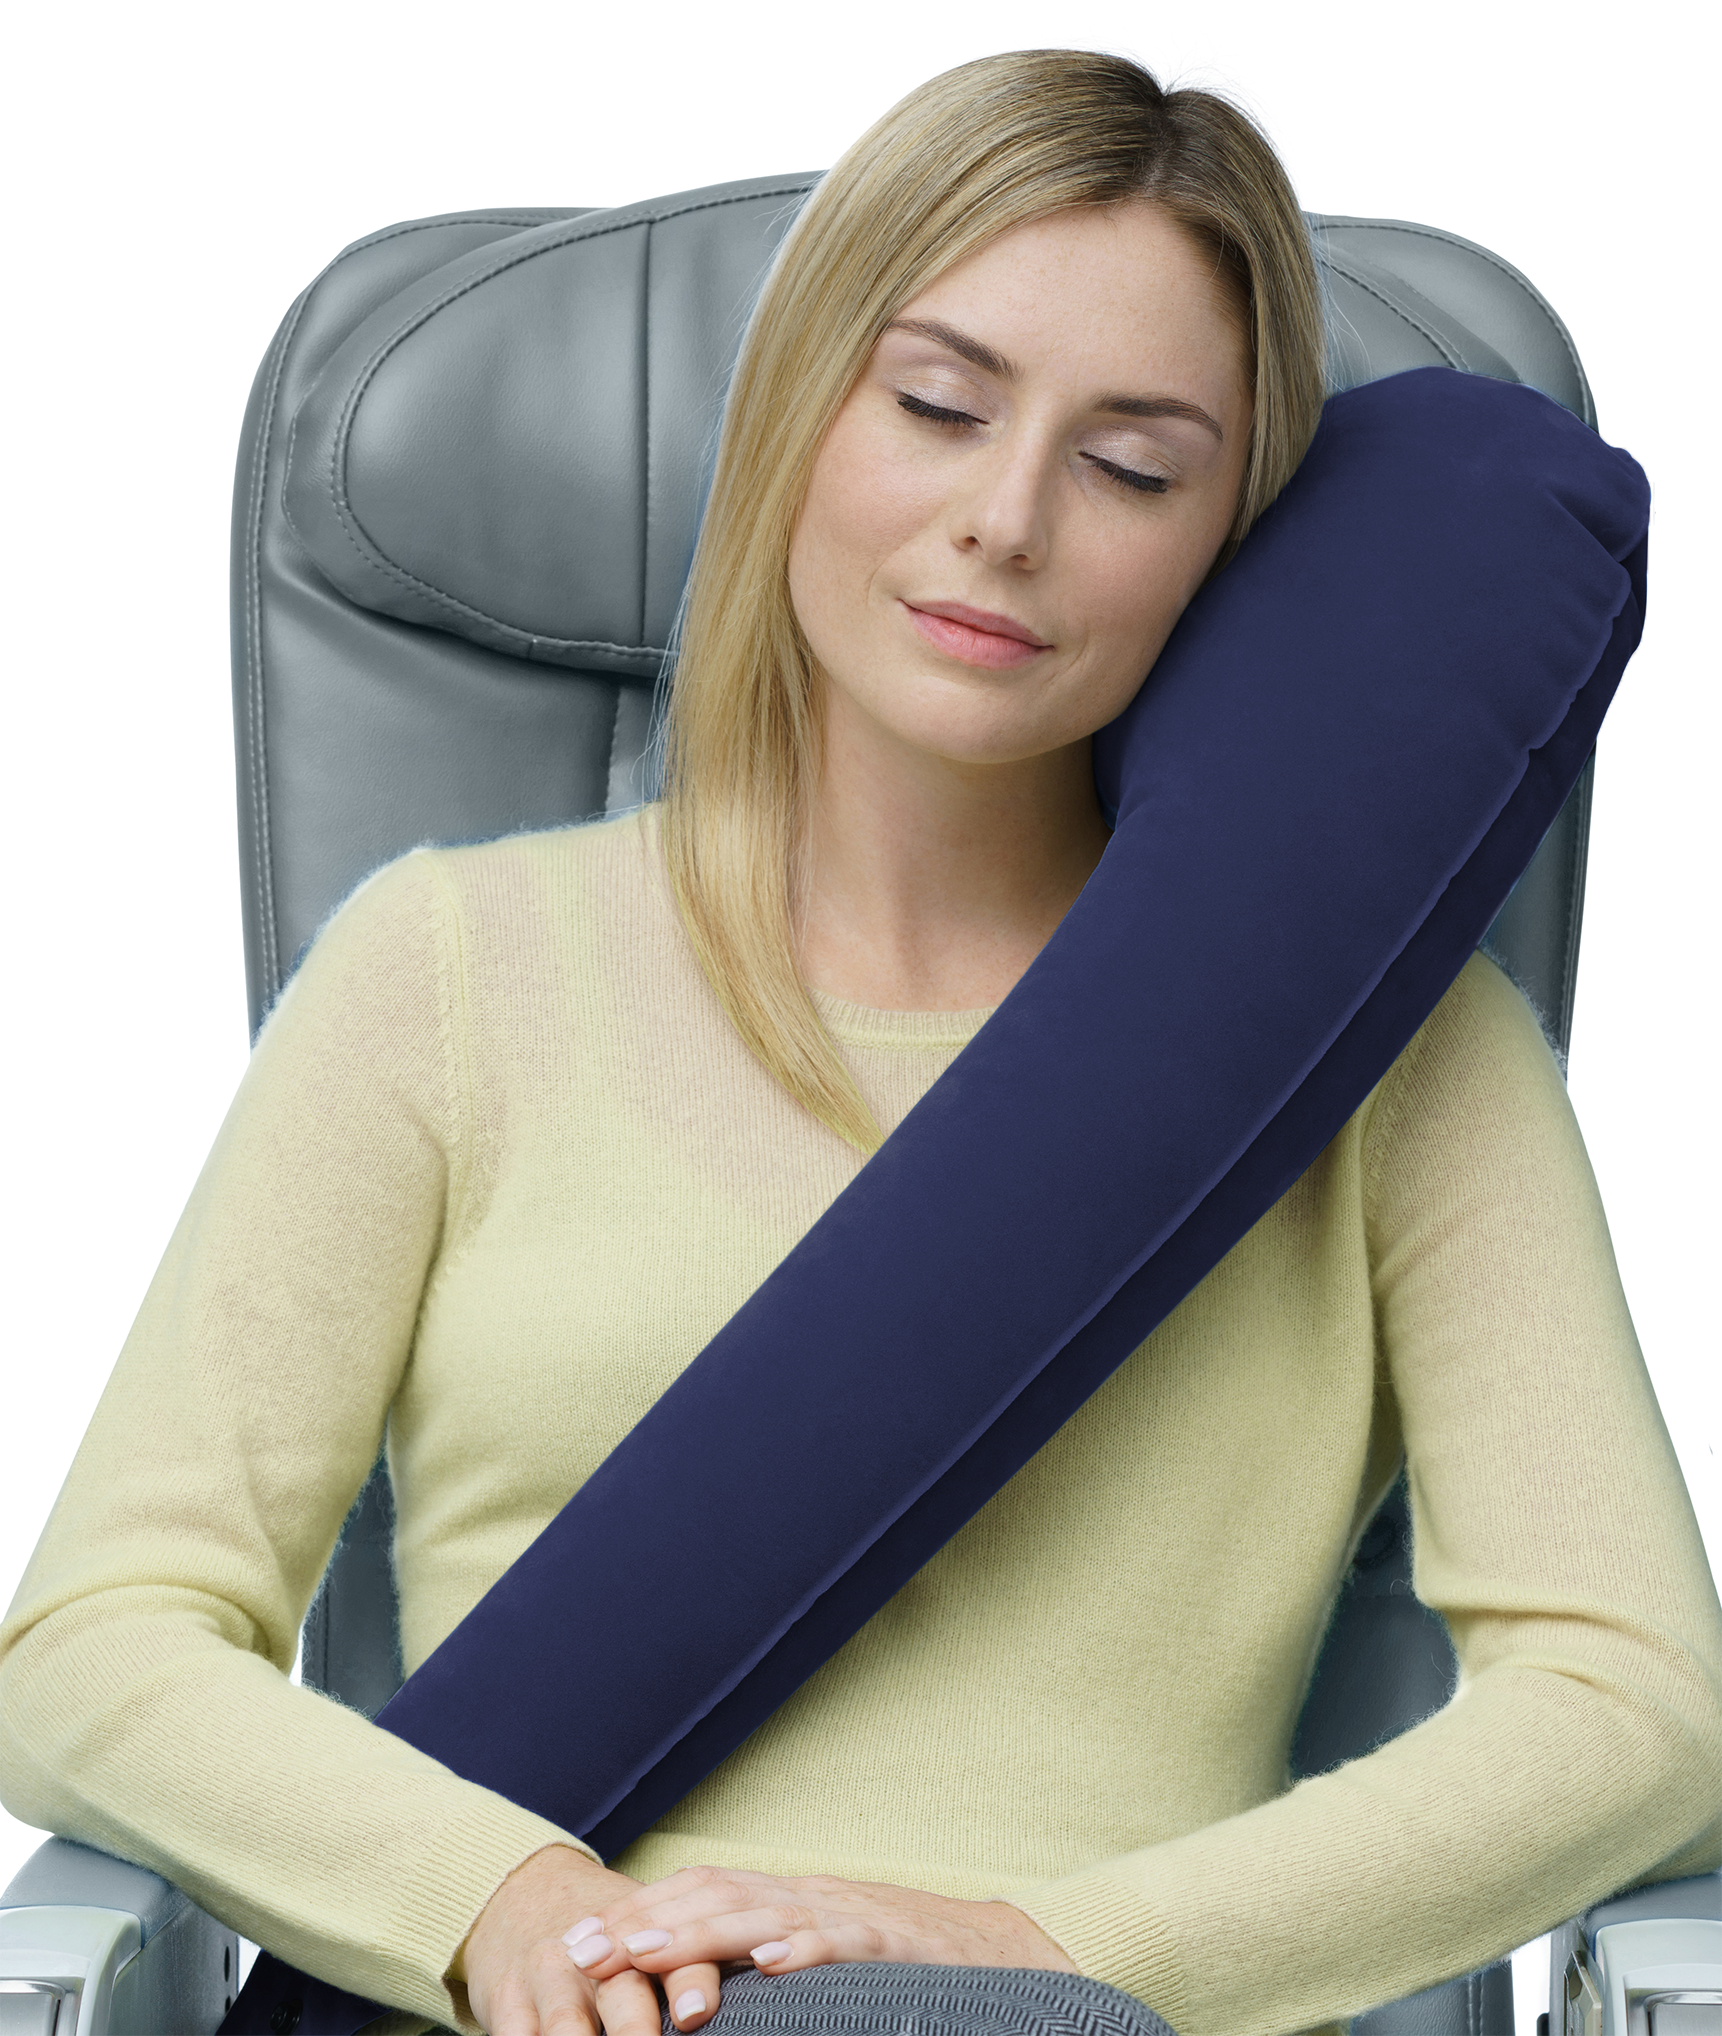 Inflatable Air Cushion Travel Pillow Headrest